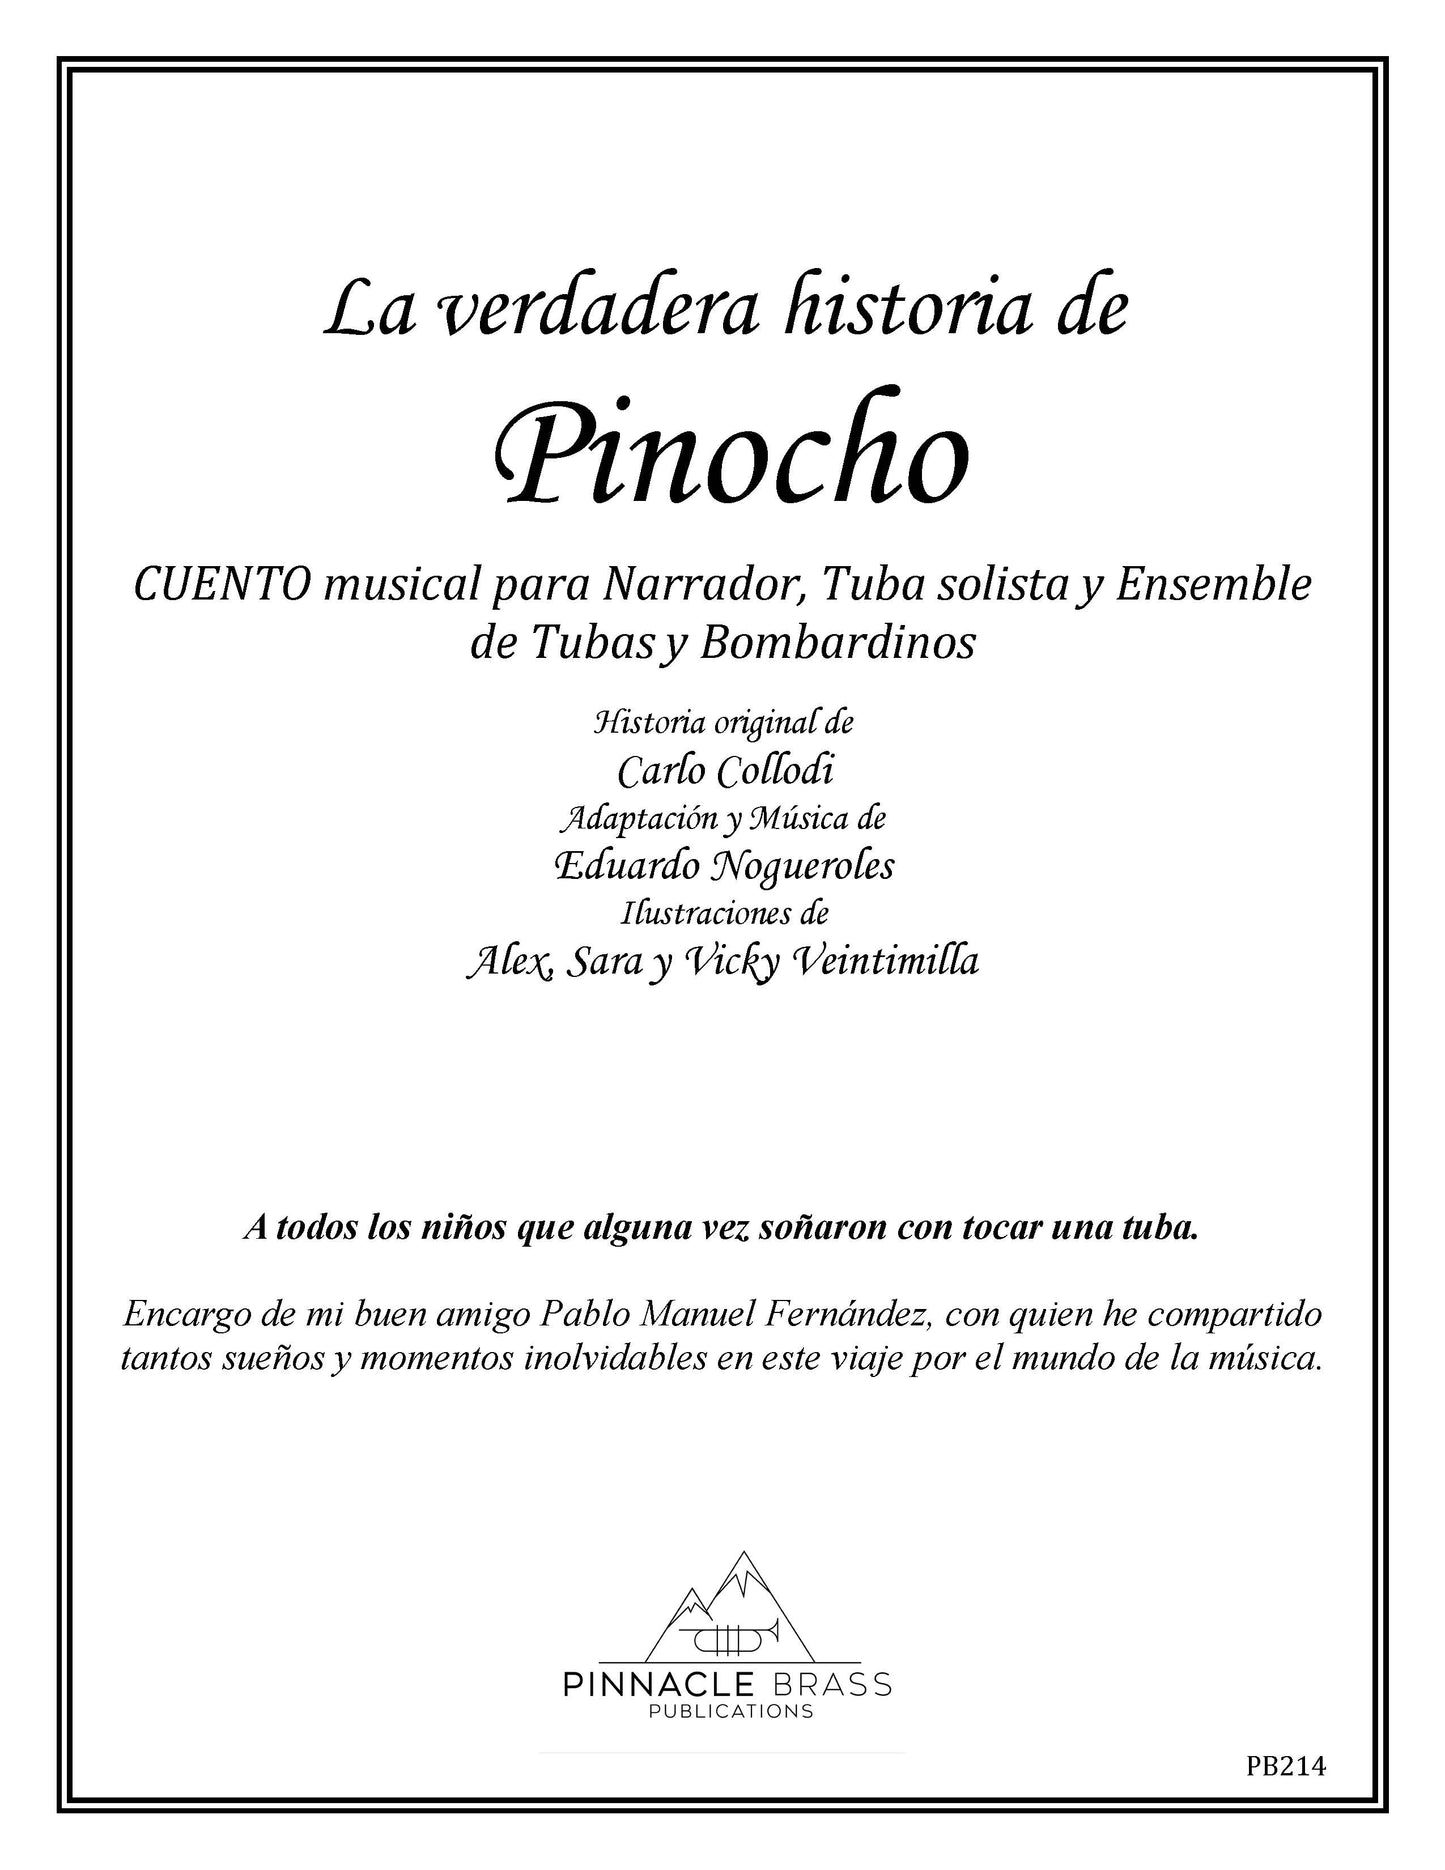 Nogueroles - The True Story of Pinnochio - Spanish Version - DOWNLOAD